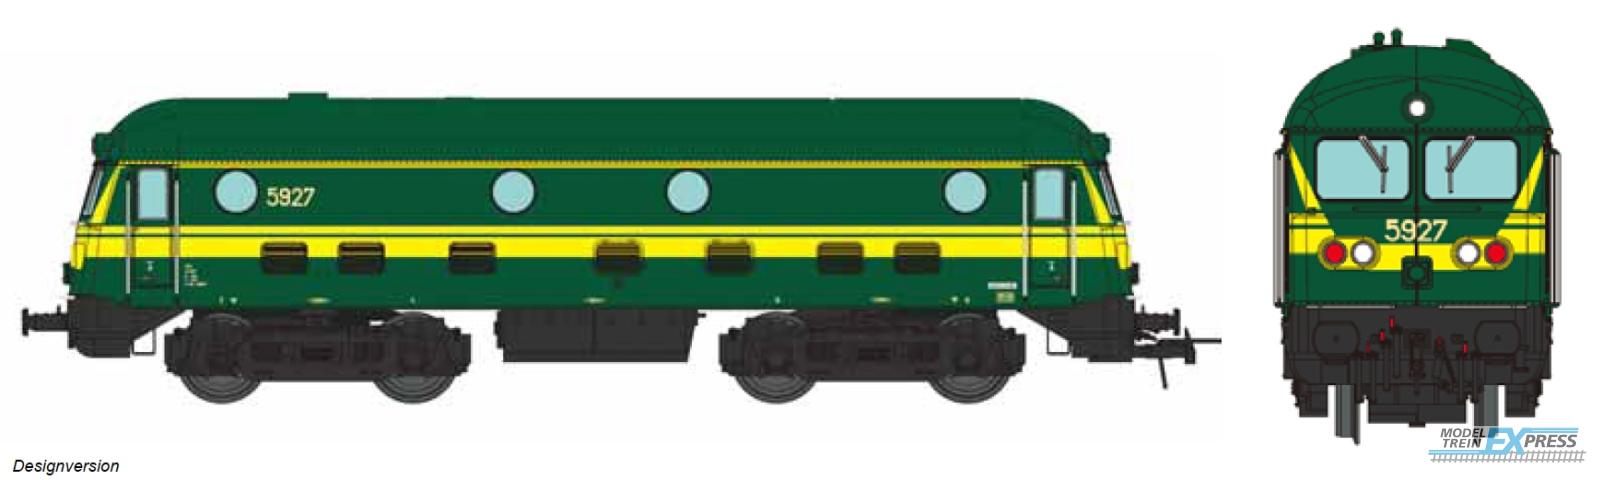 B-Models 9310.02 Diesel 5927, DC. 2-Rail Digital